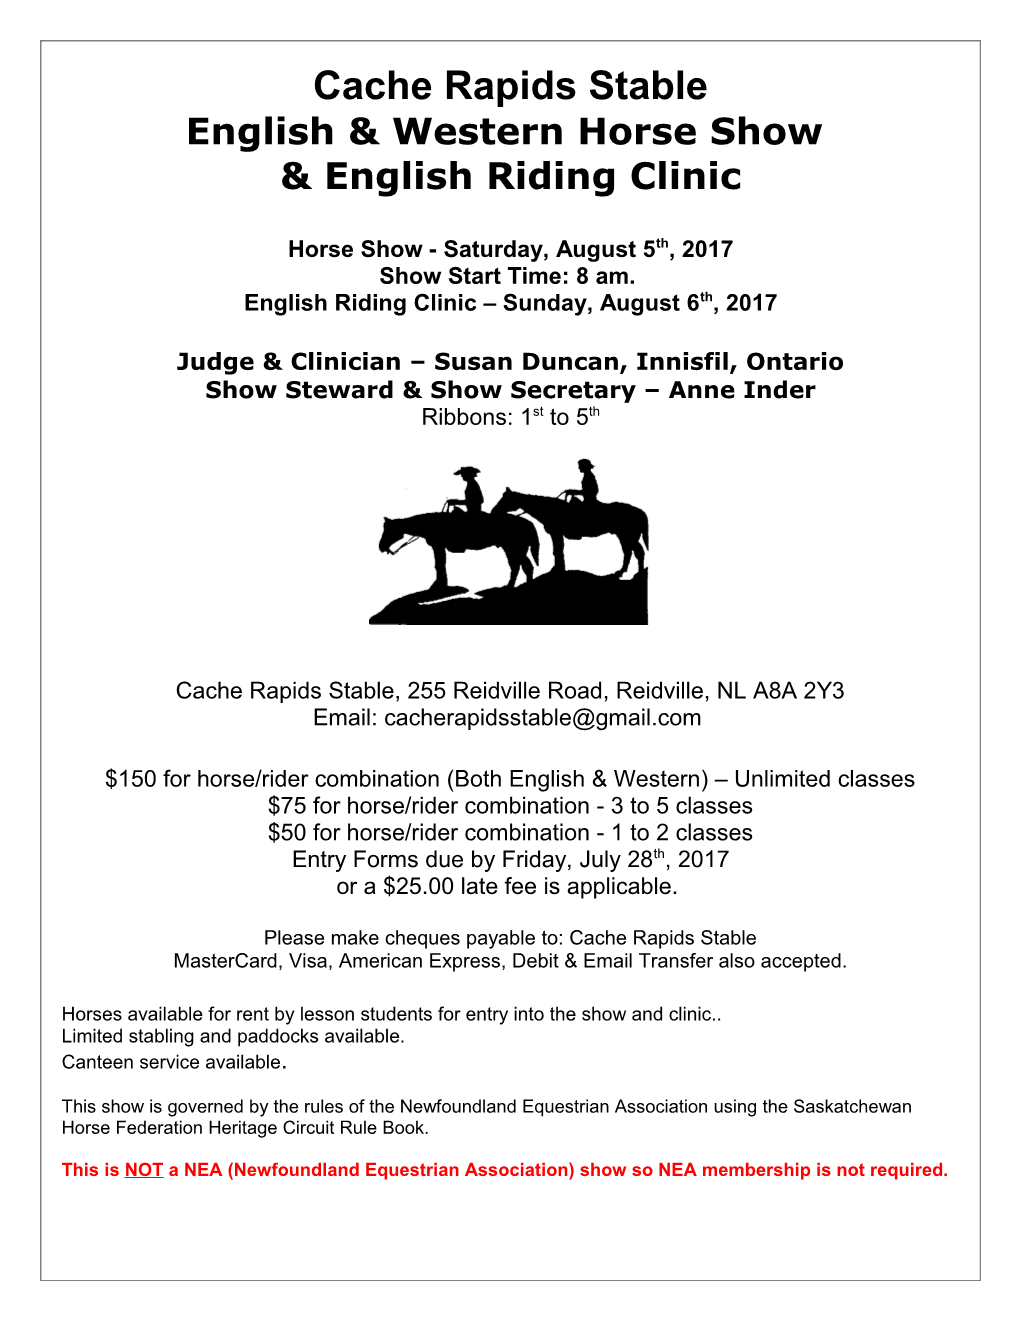 English & Western Horse Show